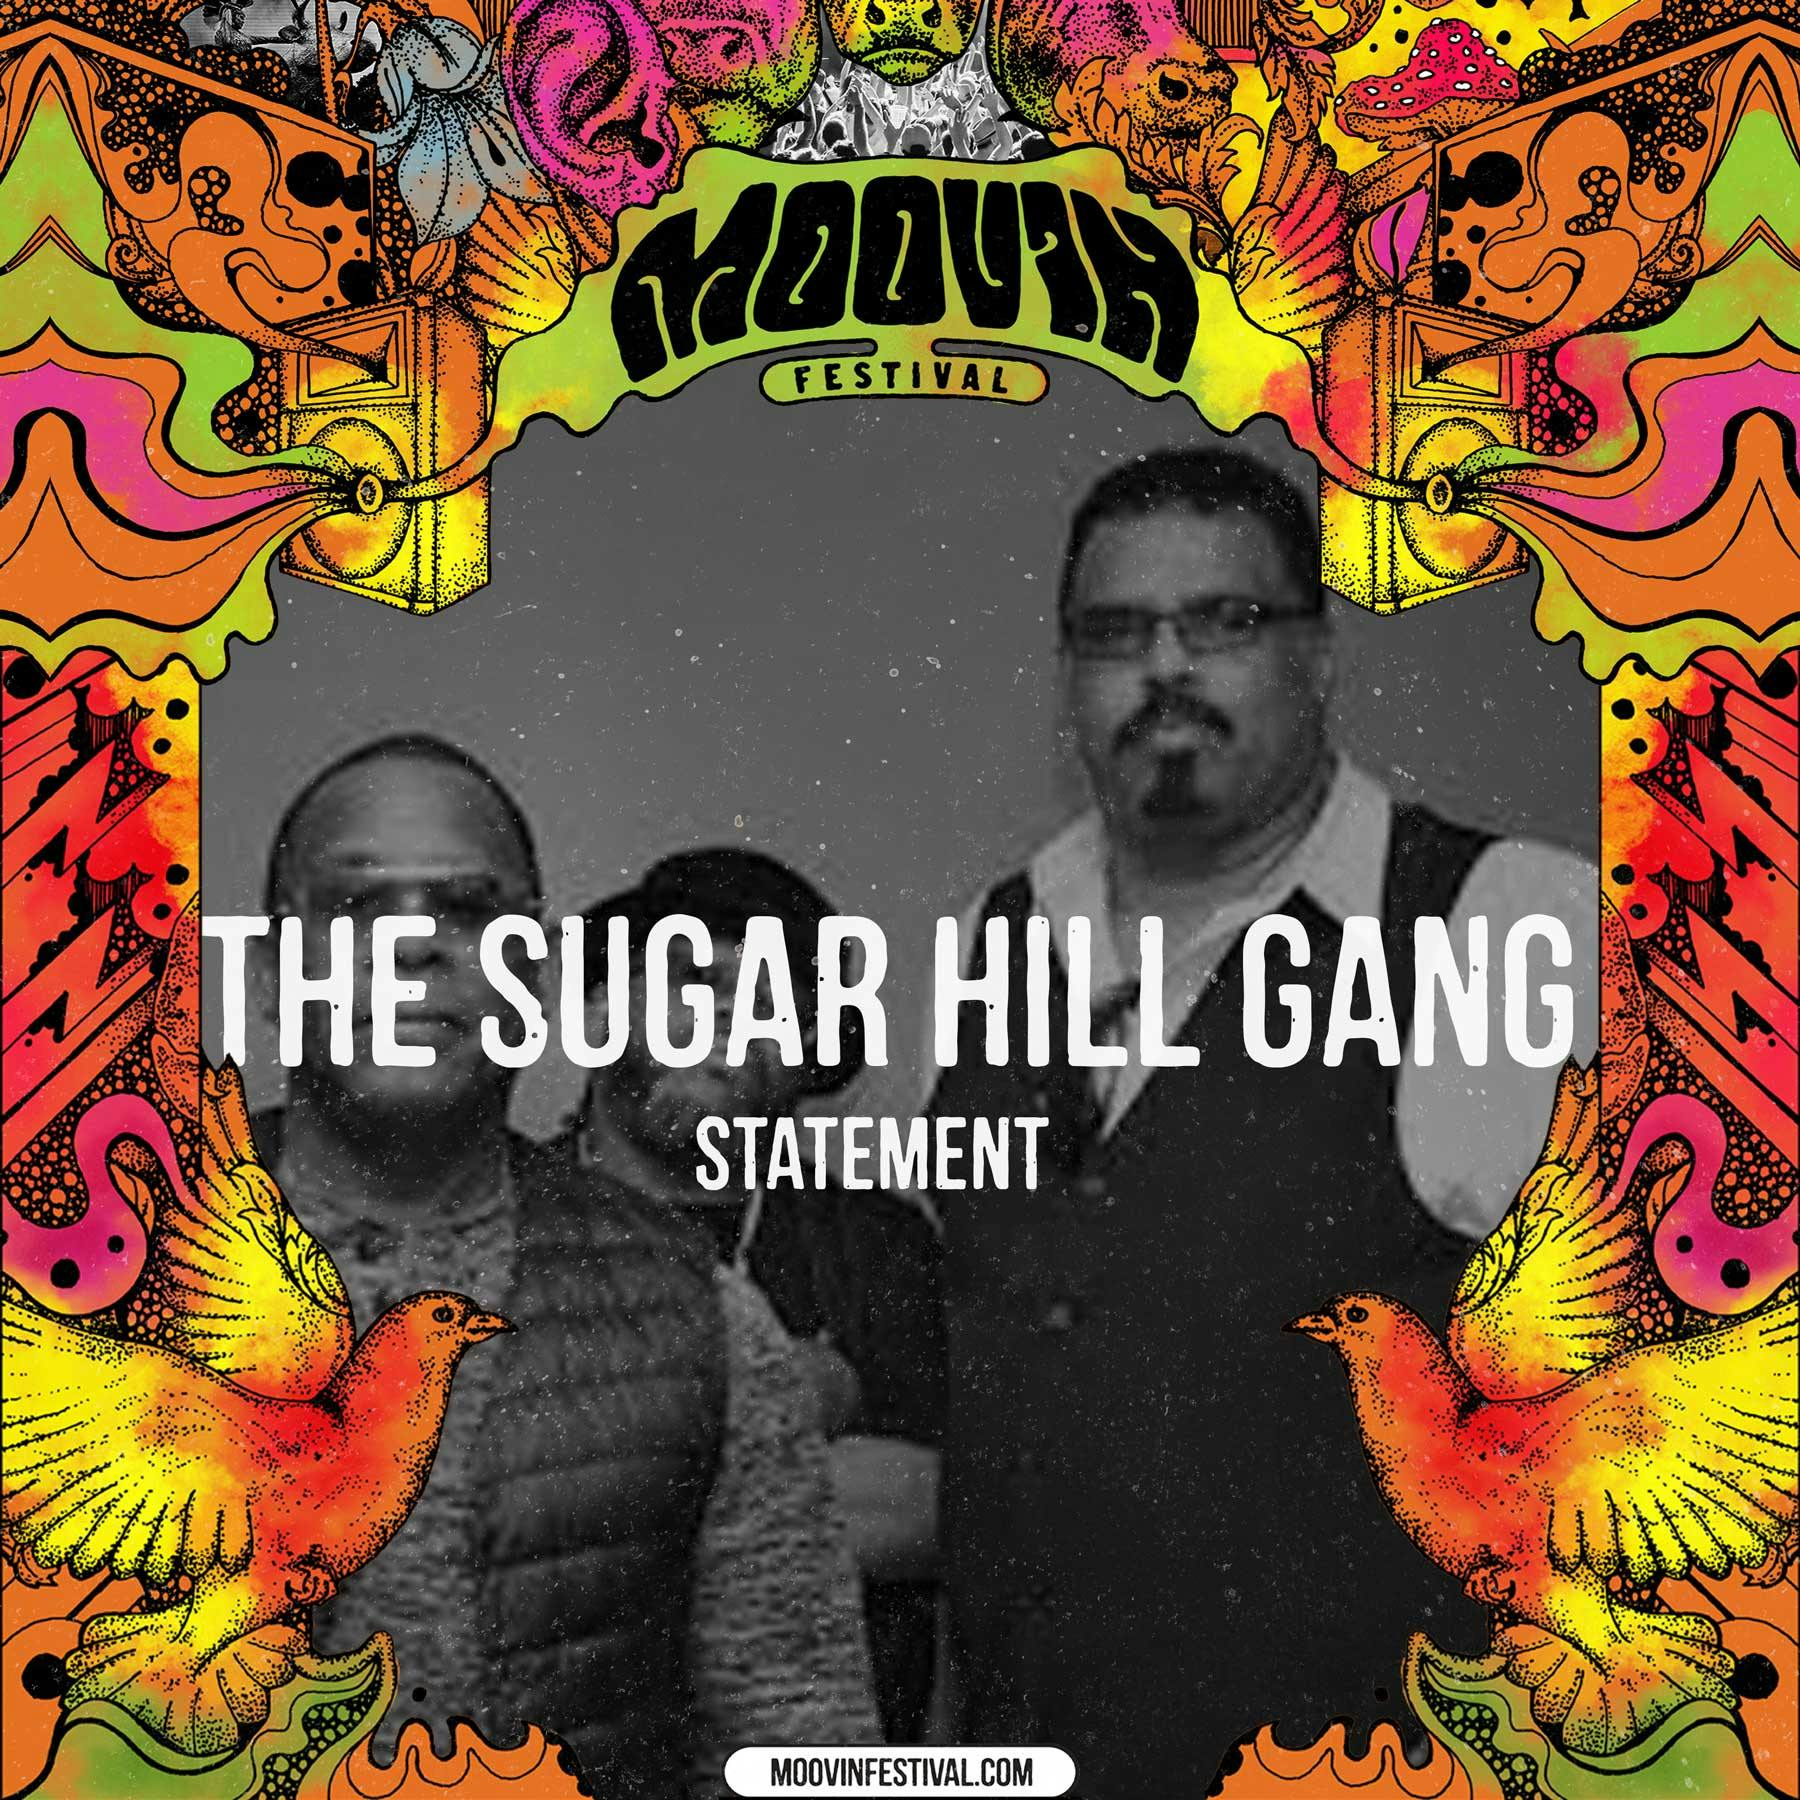 The Sugar Hill Gang Statement